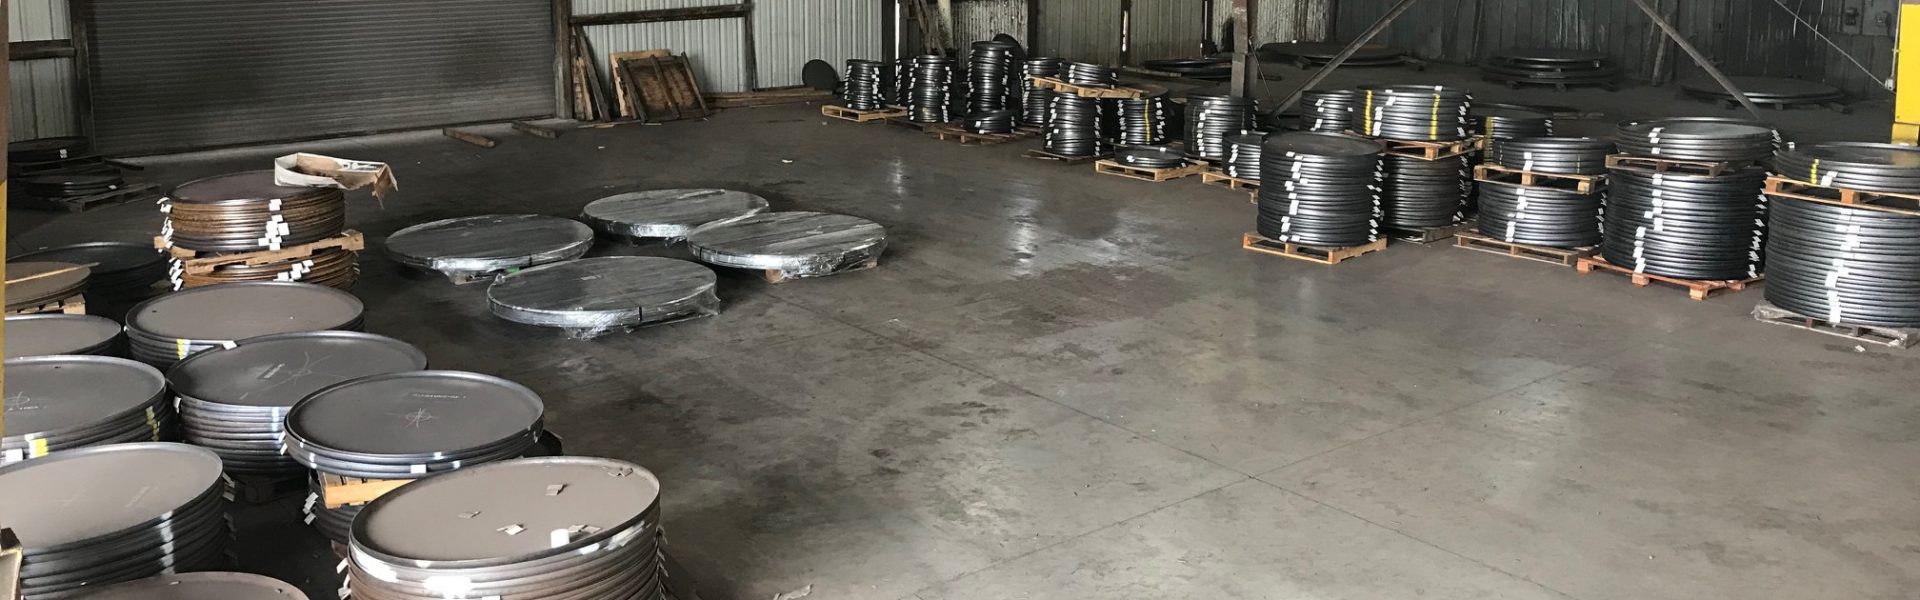 Shamrock Steel floor of warehouse with stacks of round steel parts.